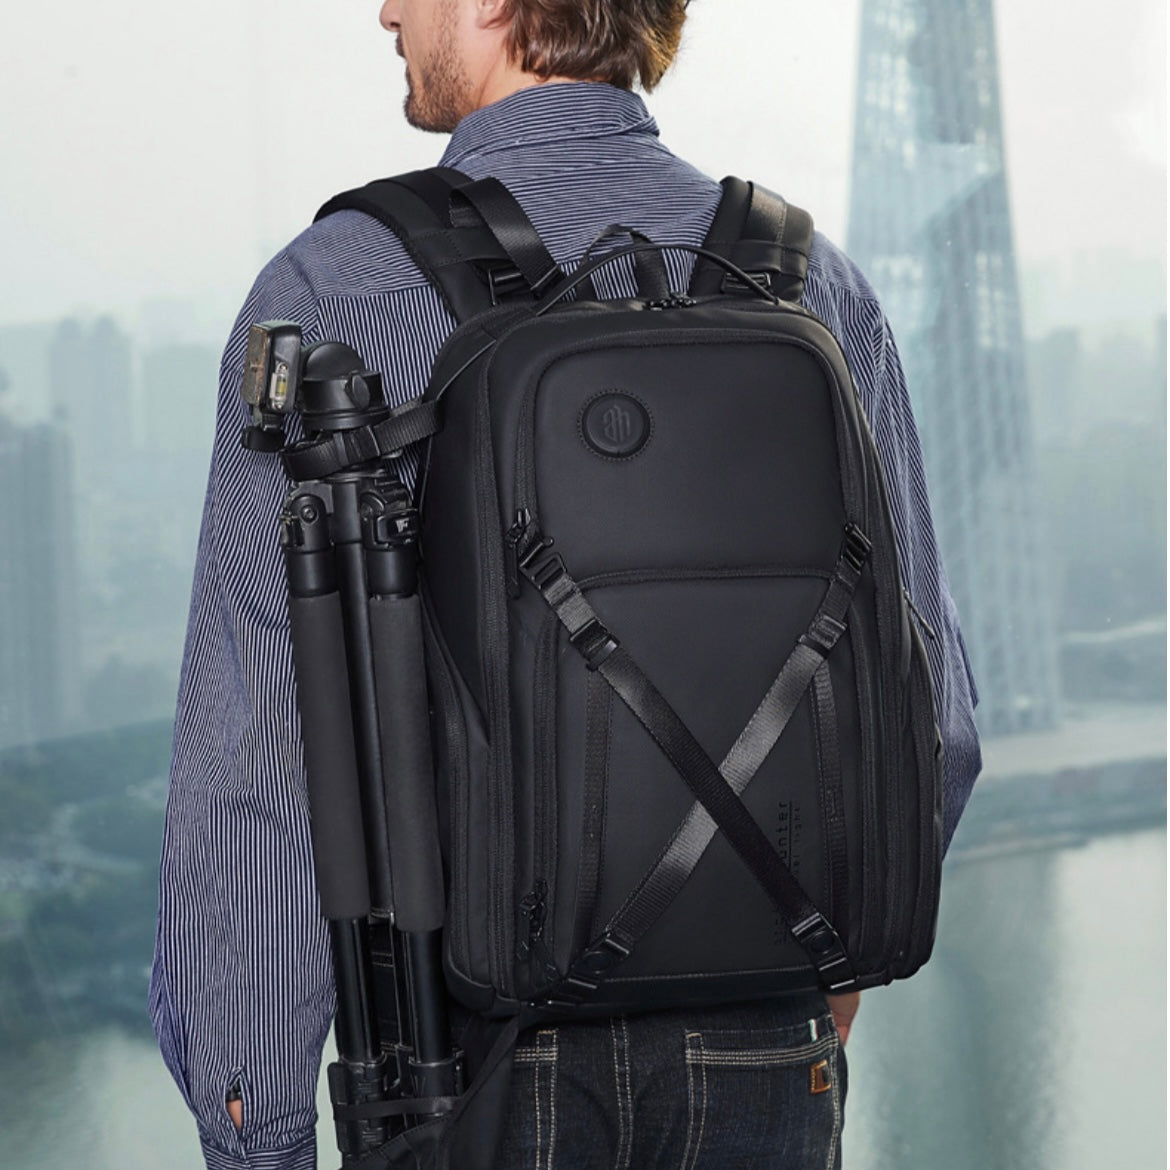 i1002 Arctic Hunter SLR backpack camera bag waterproof large capacity outdoor travel backpack